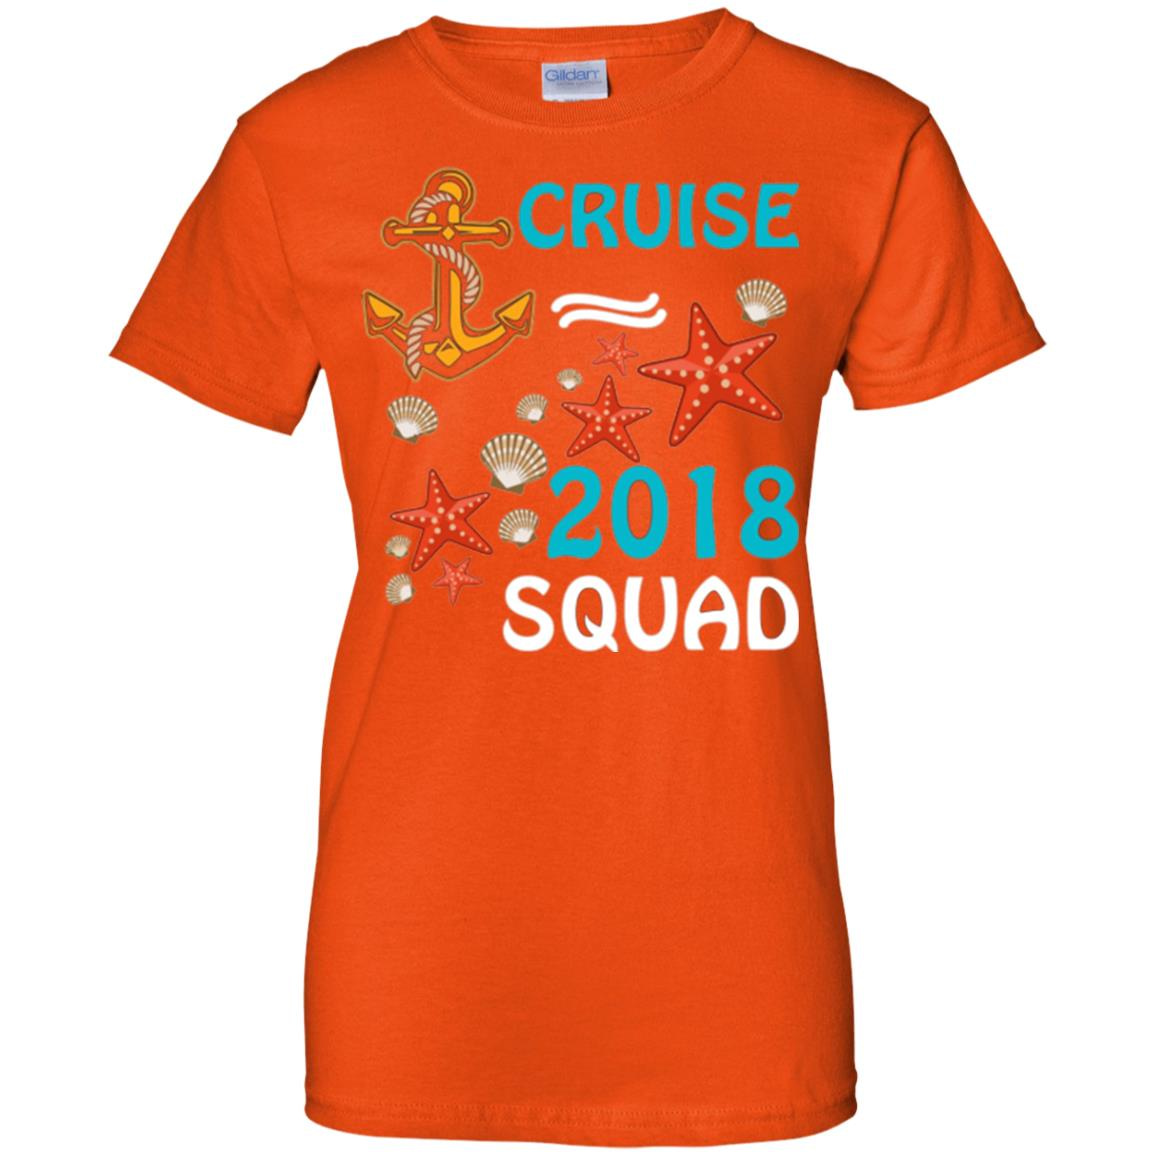 Inktee Store - Family Cruise 2018 Shirt Cruise Squad Women’s T-Shirt Image